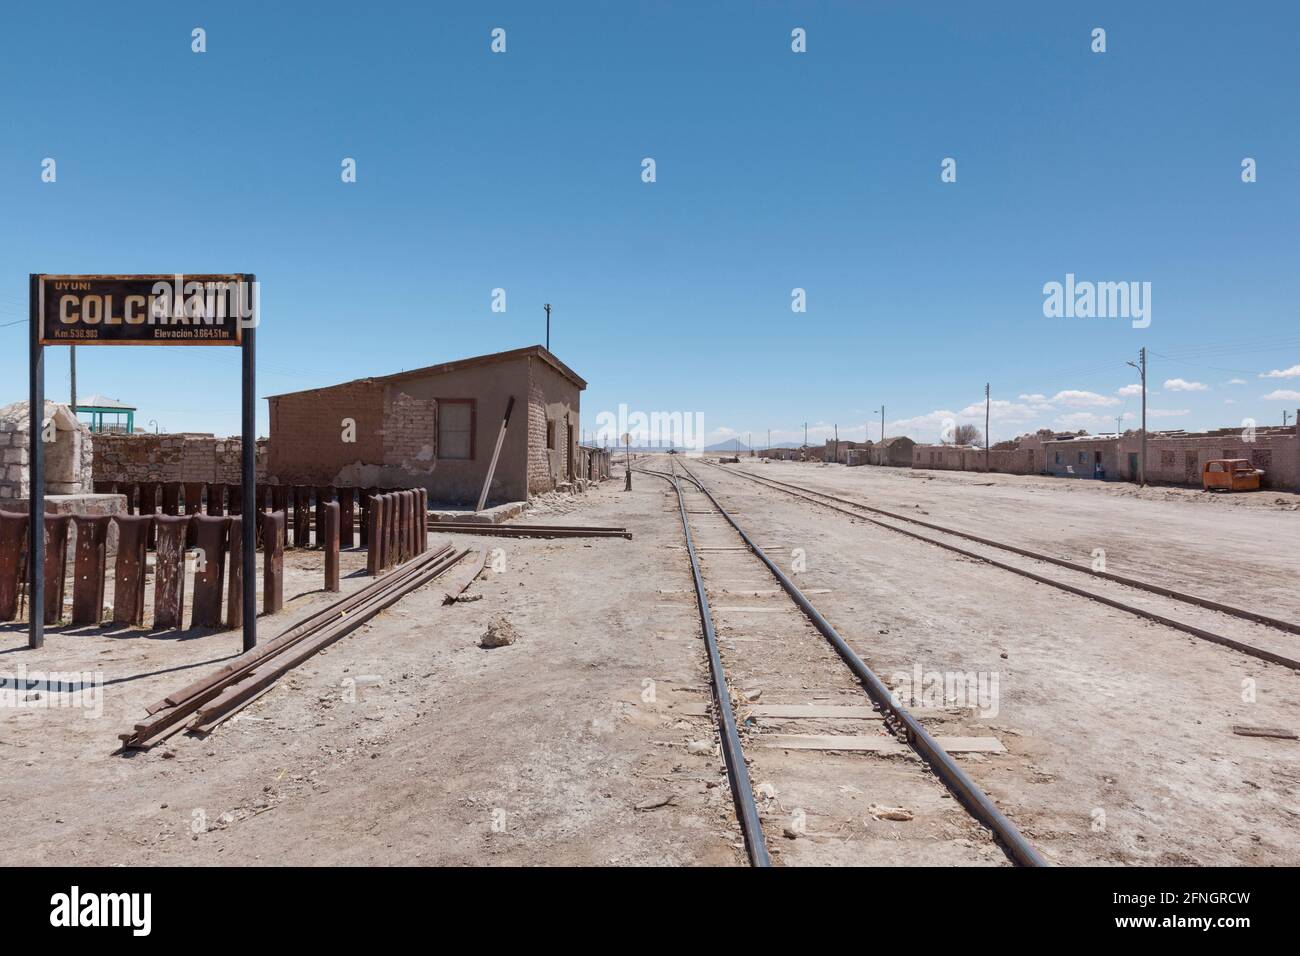 Colchani railway station, Bolivia Stock Photo